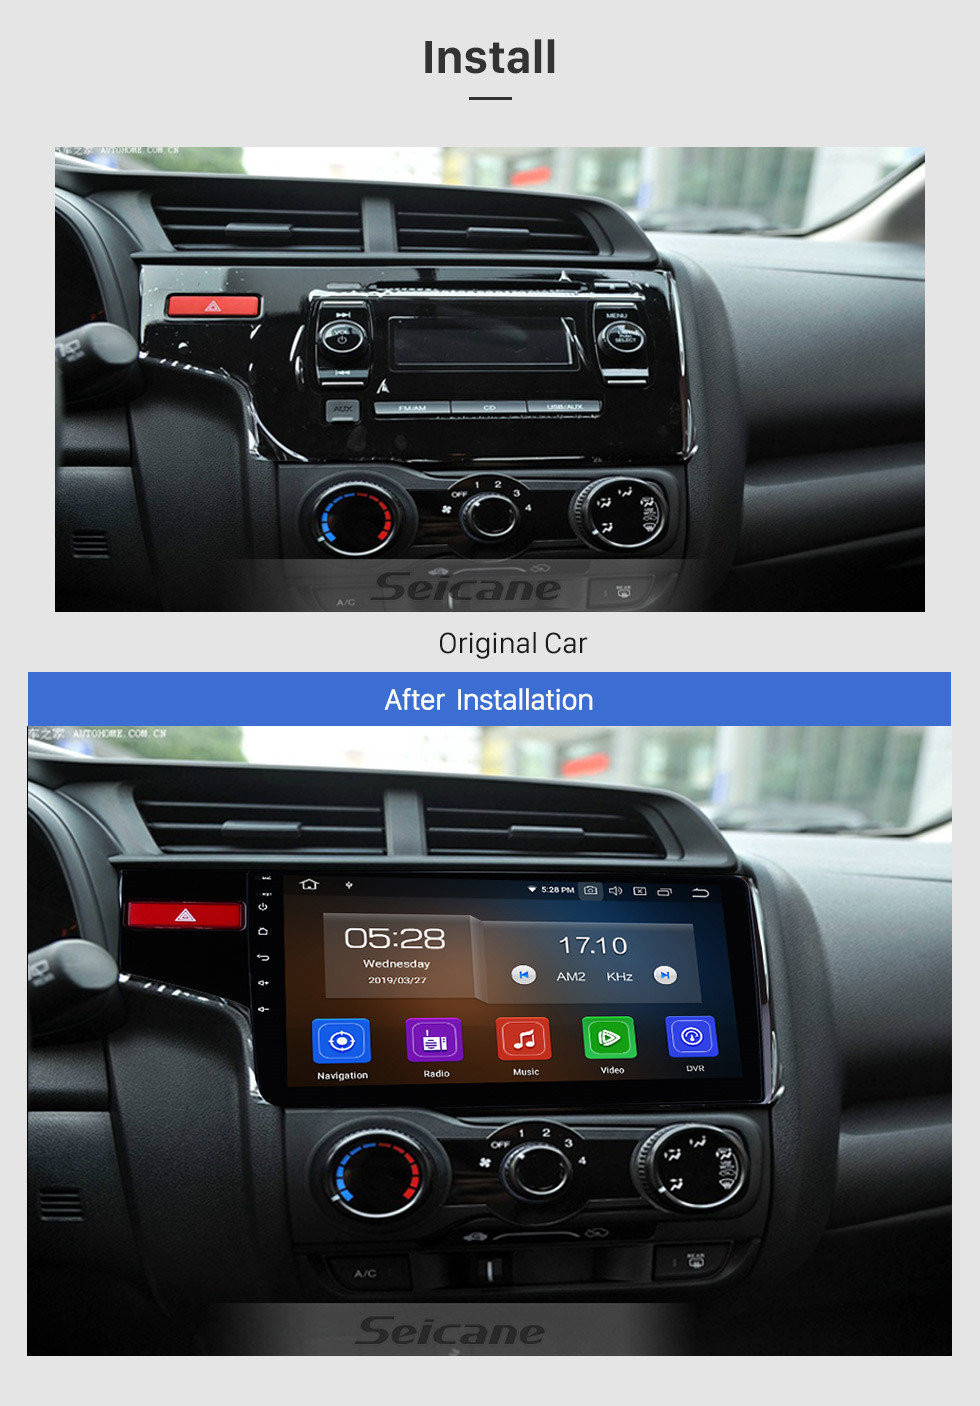 Seicane 10,1 Zoll OEM Android 11.0 Radio Kapazitiver Touchscreen Für 2014 2015 Honda FIT Support WiFi Bluetooth GPS Navigationssystem TPMS DVR OBD II AUX Kopfstützenmonitor Steuerung Video Rückfahrkamera USB SD